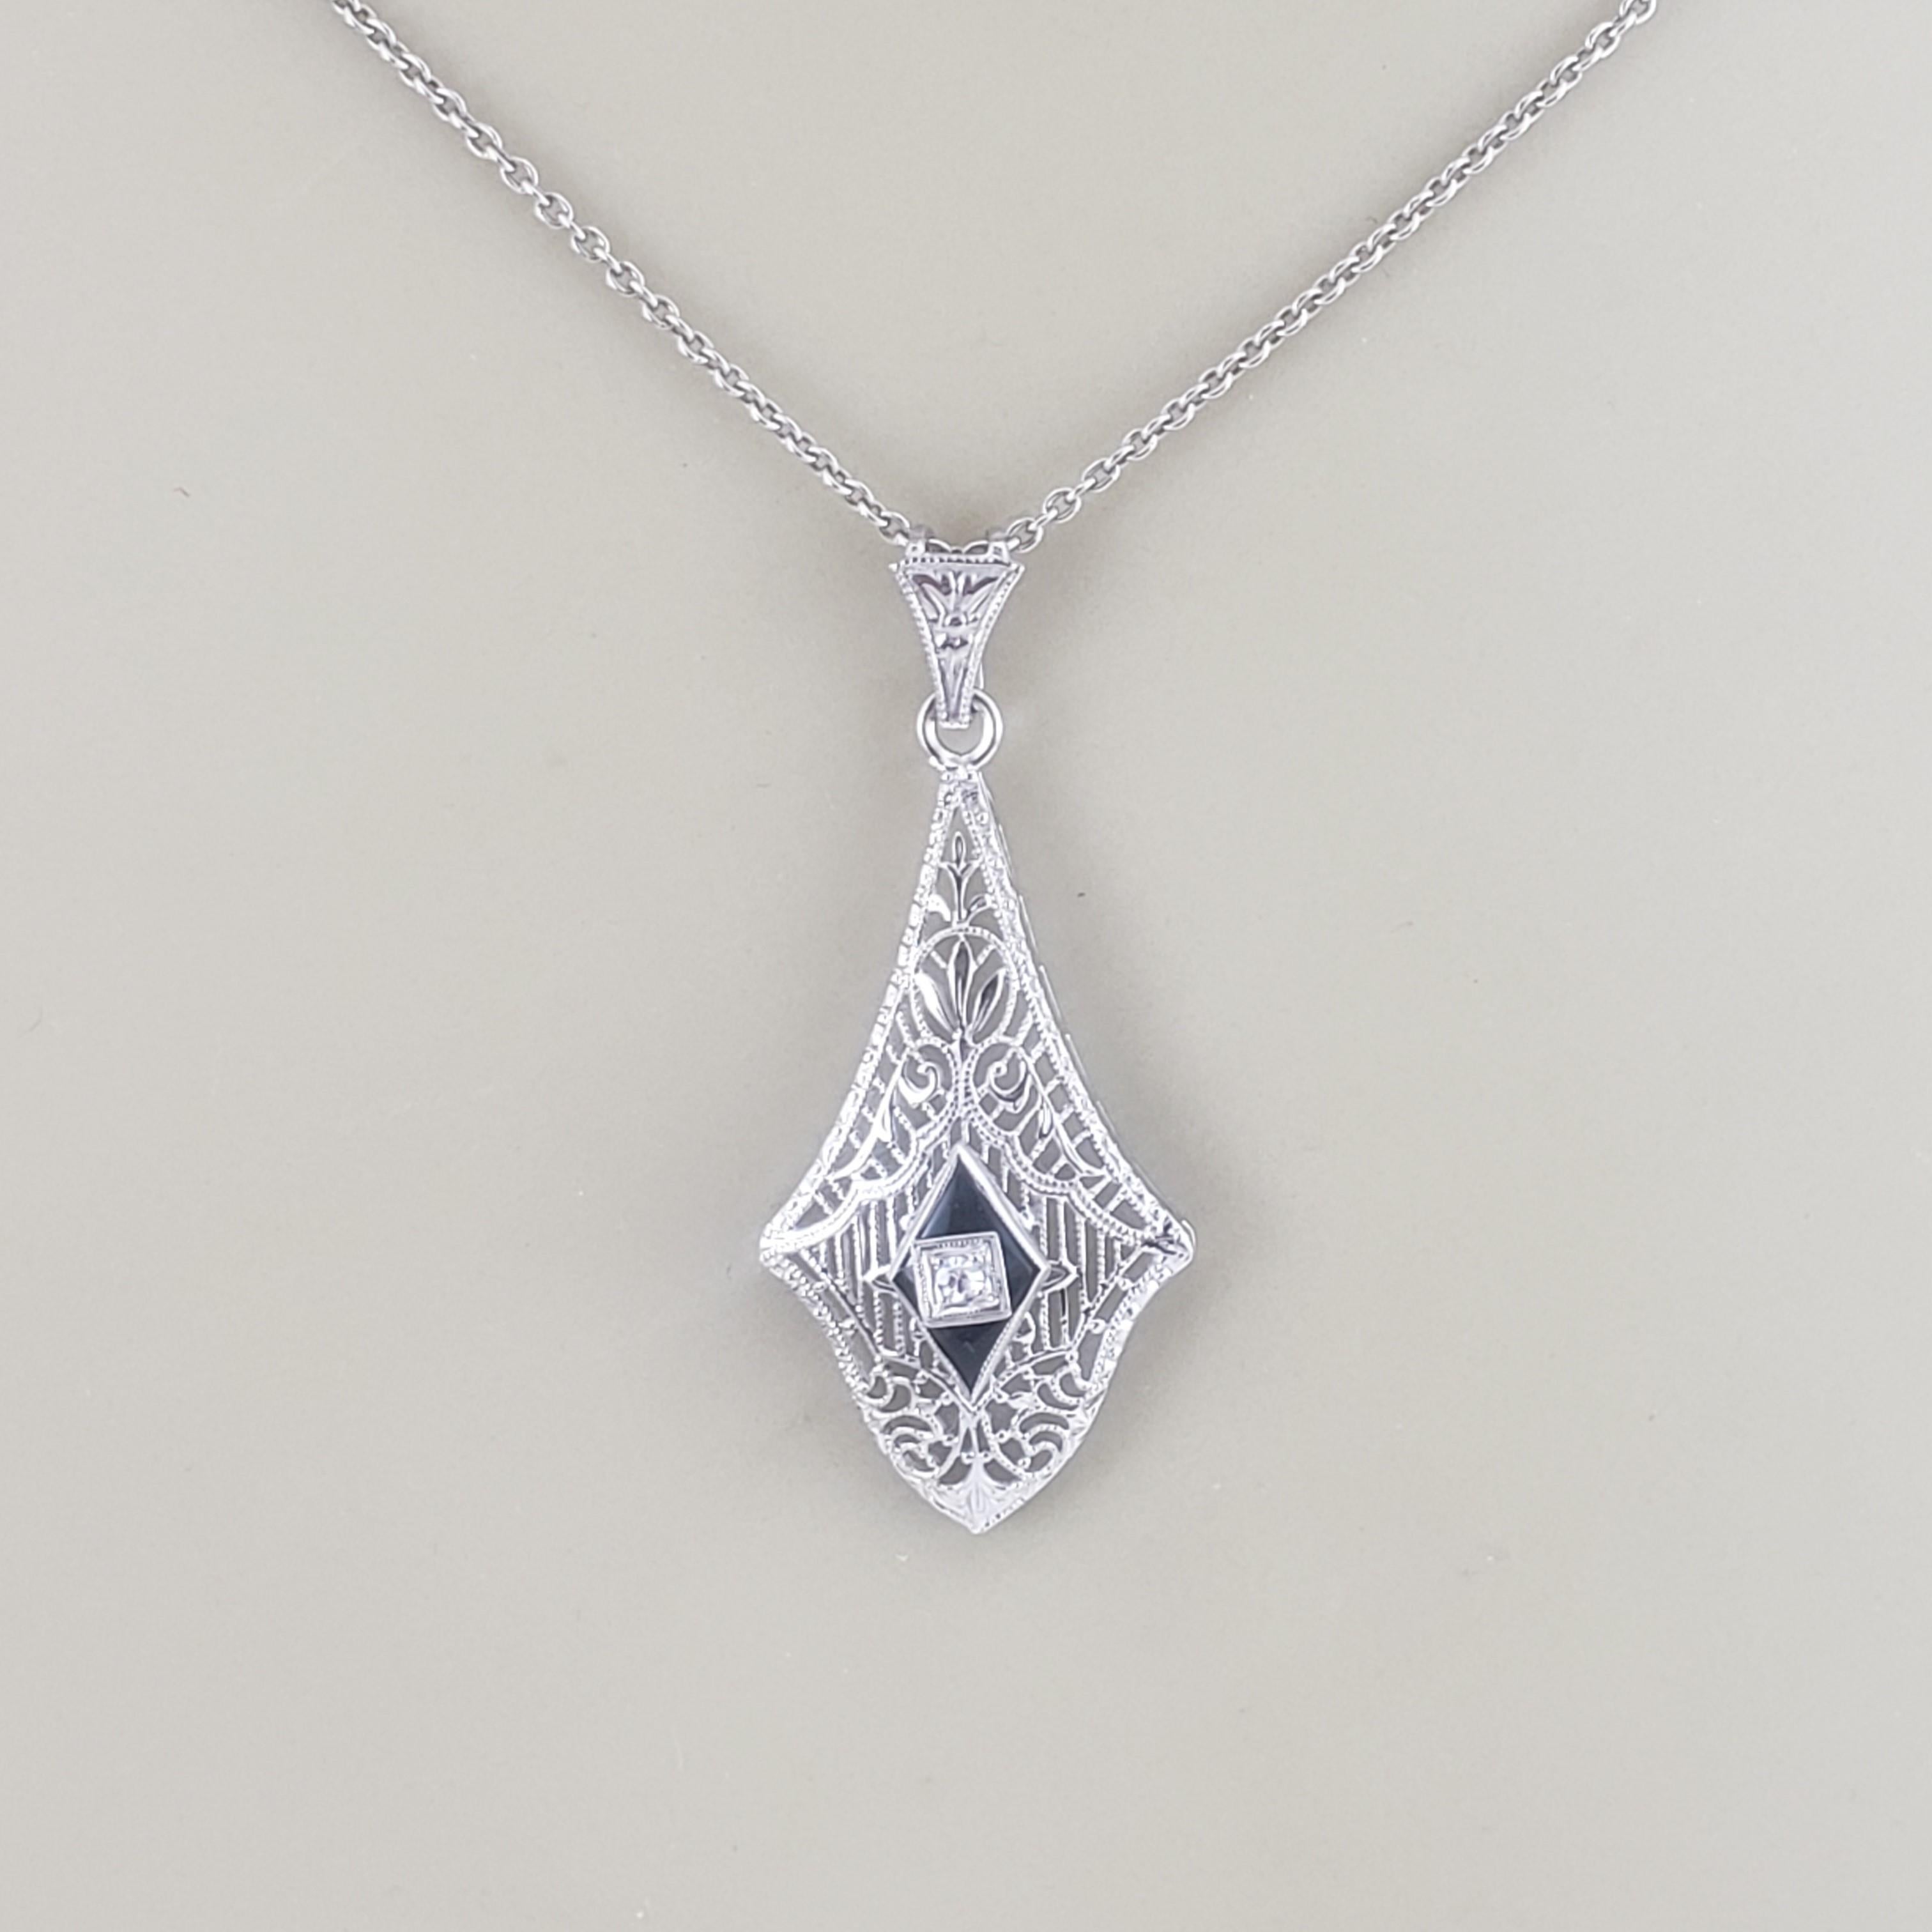 10 Karat White Gold Filigree Onyx and Diamond Pendant #16743 For Sale 2